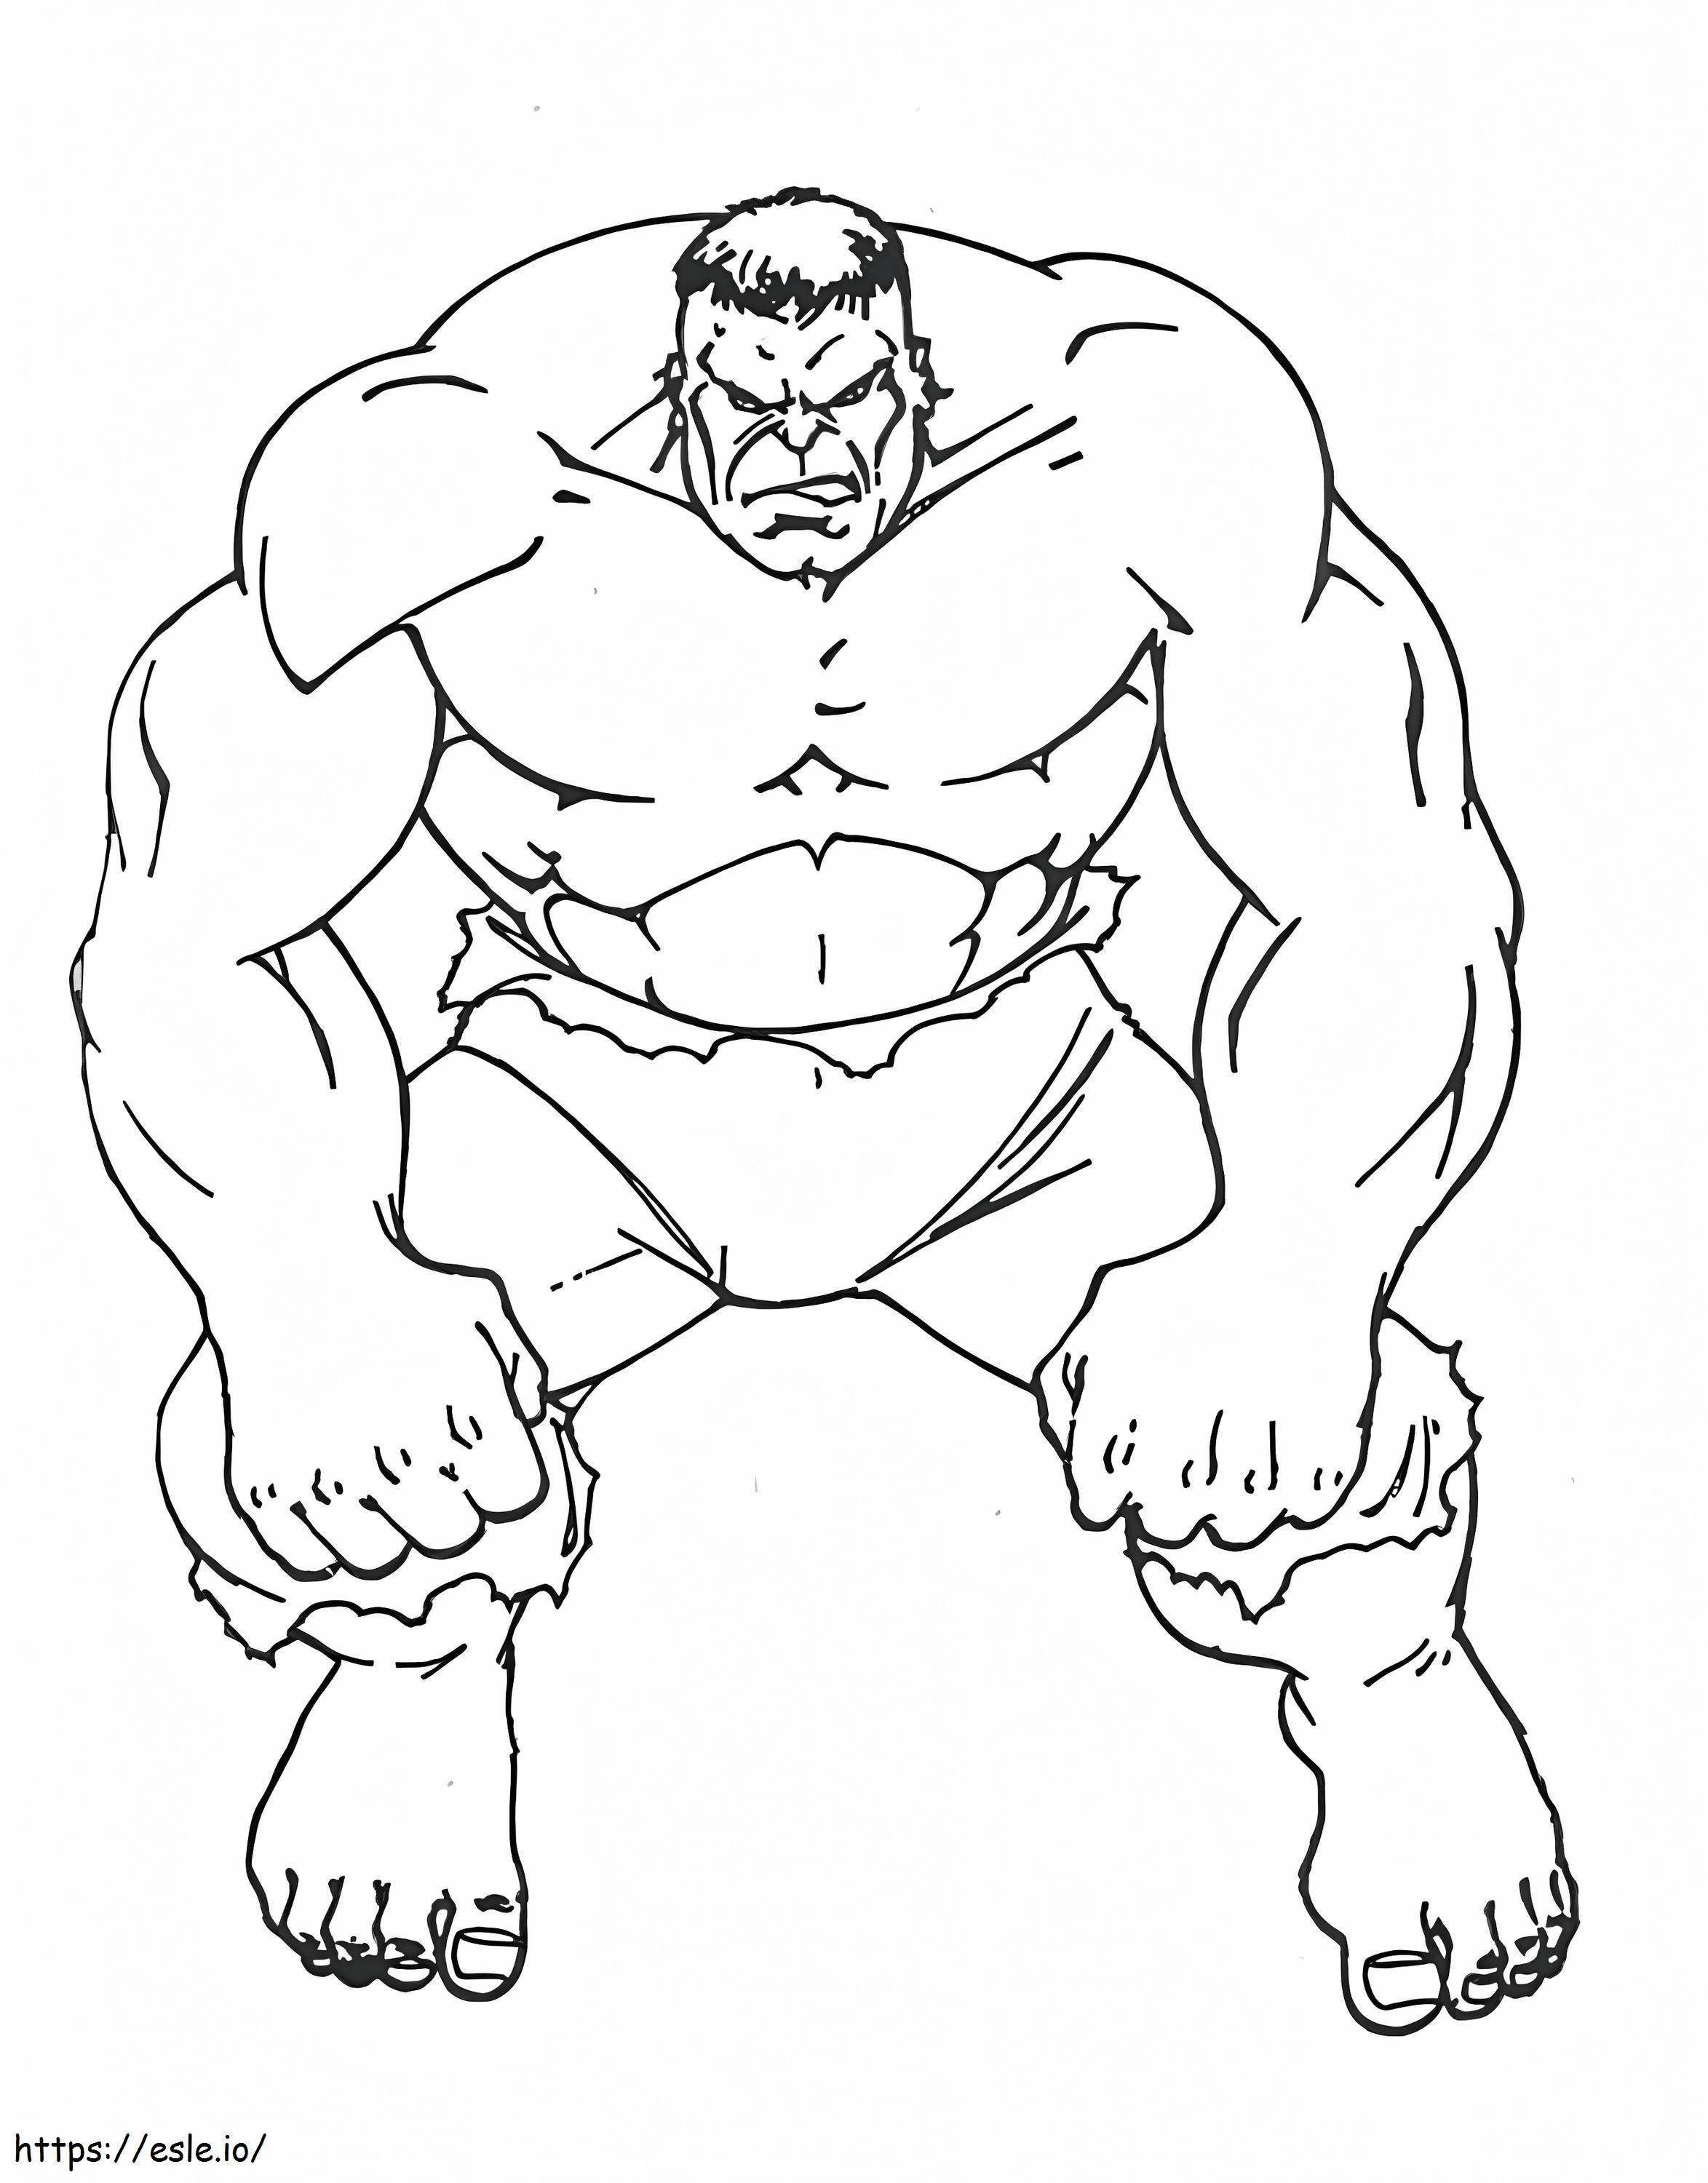 Genialer Hulk ausmalbilder